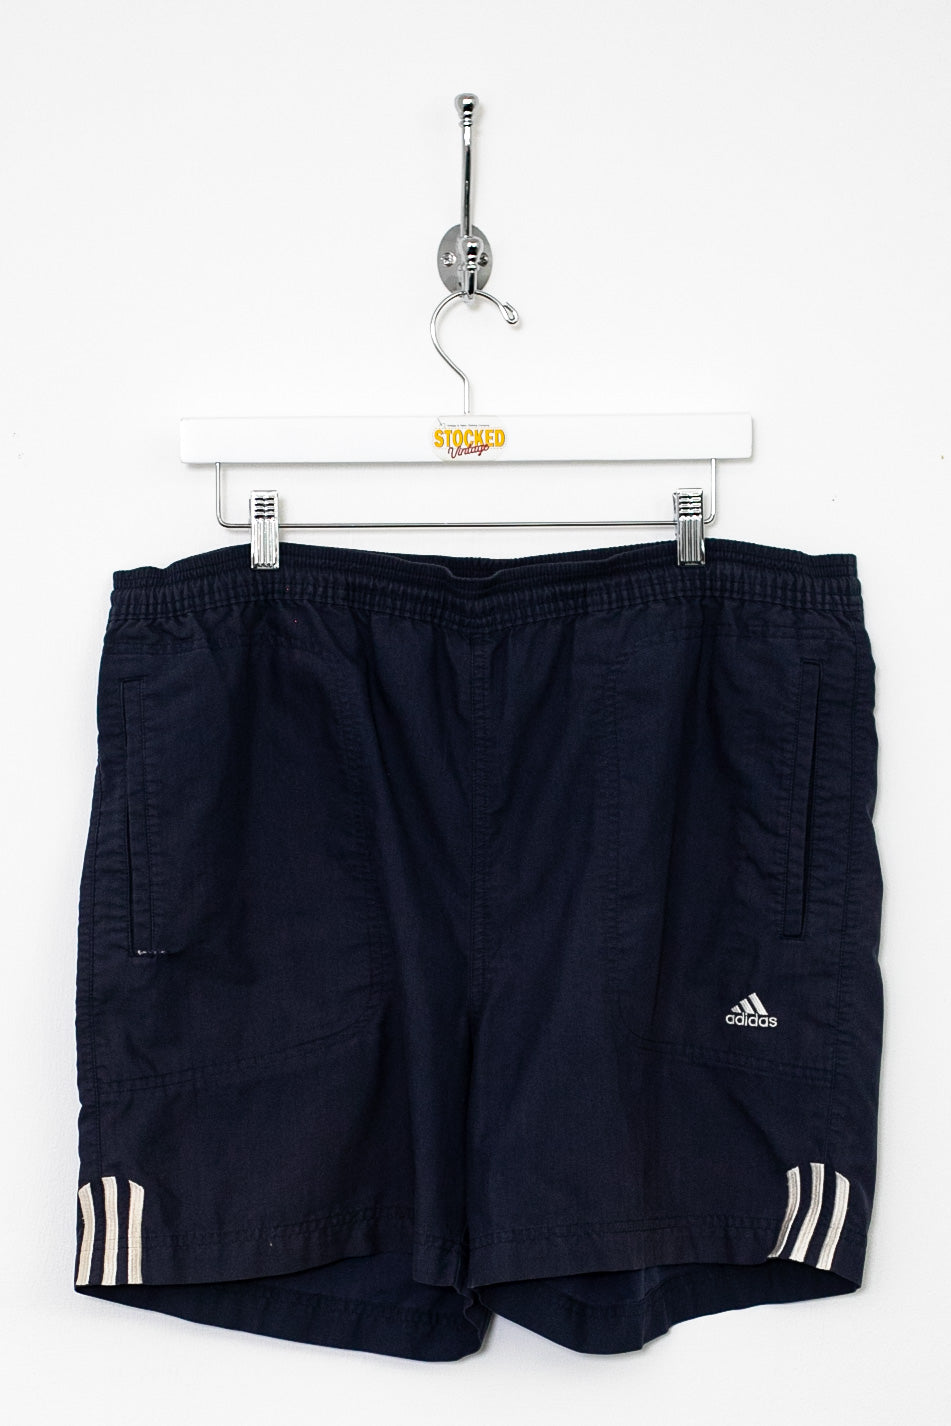 00s Adidas Shorts (XL)